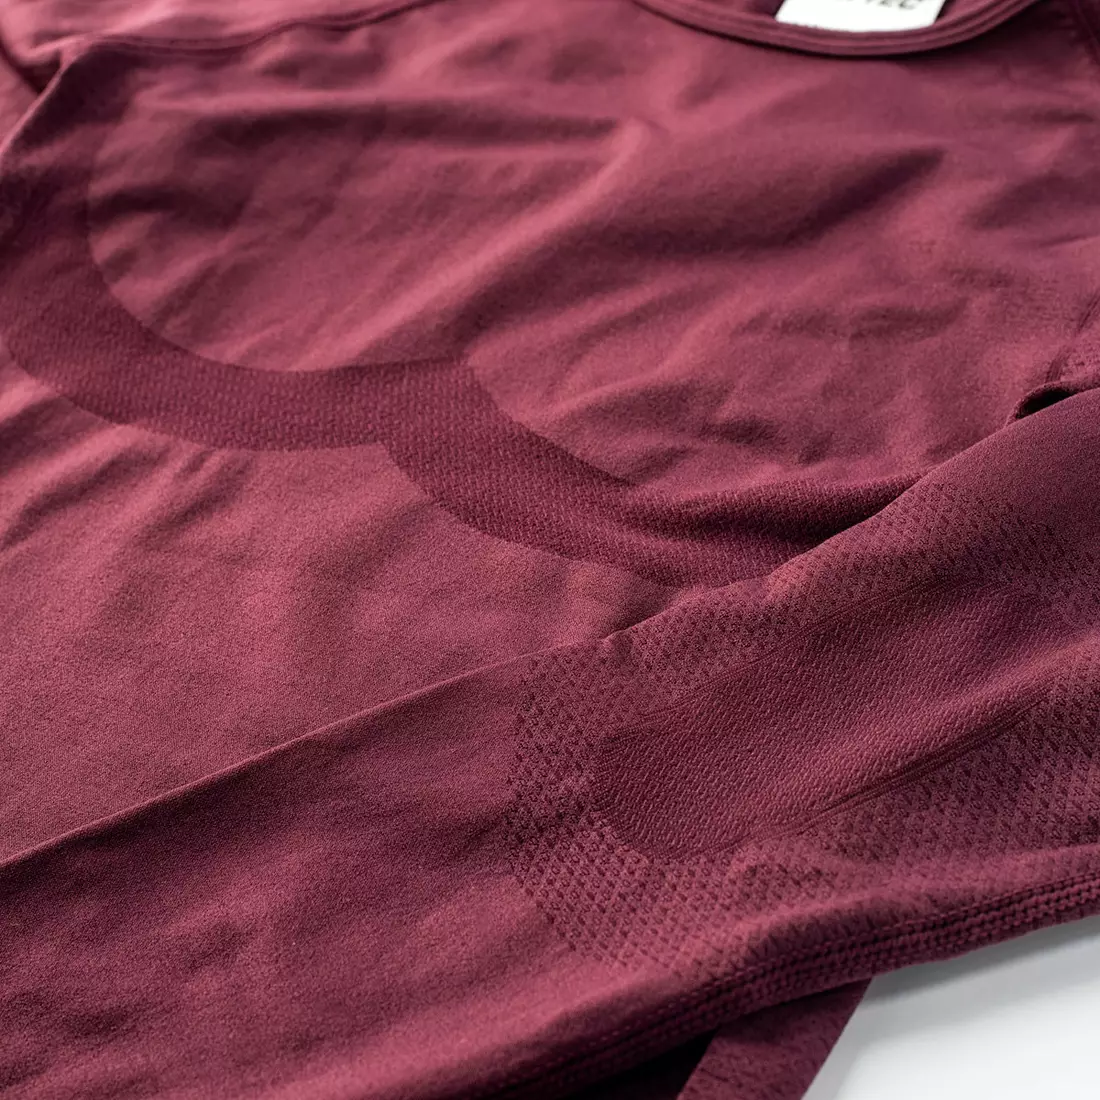 HI-TEC base layer ladies thermal underwear jersey HIKRA top, purple